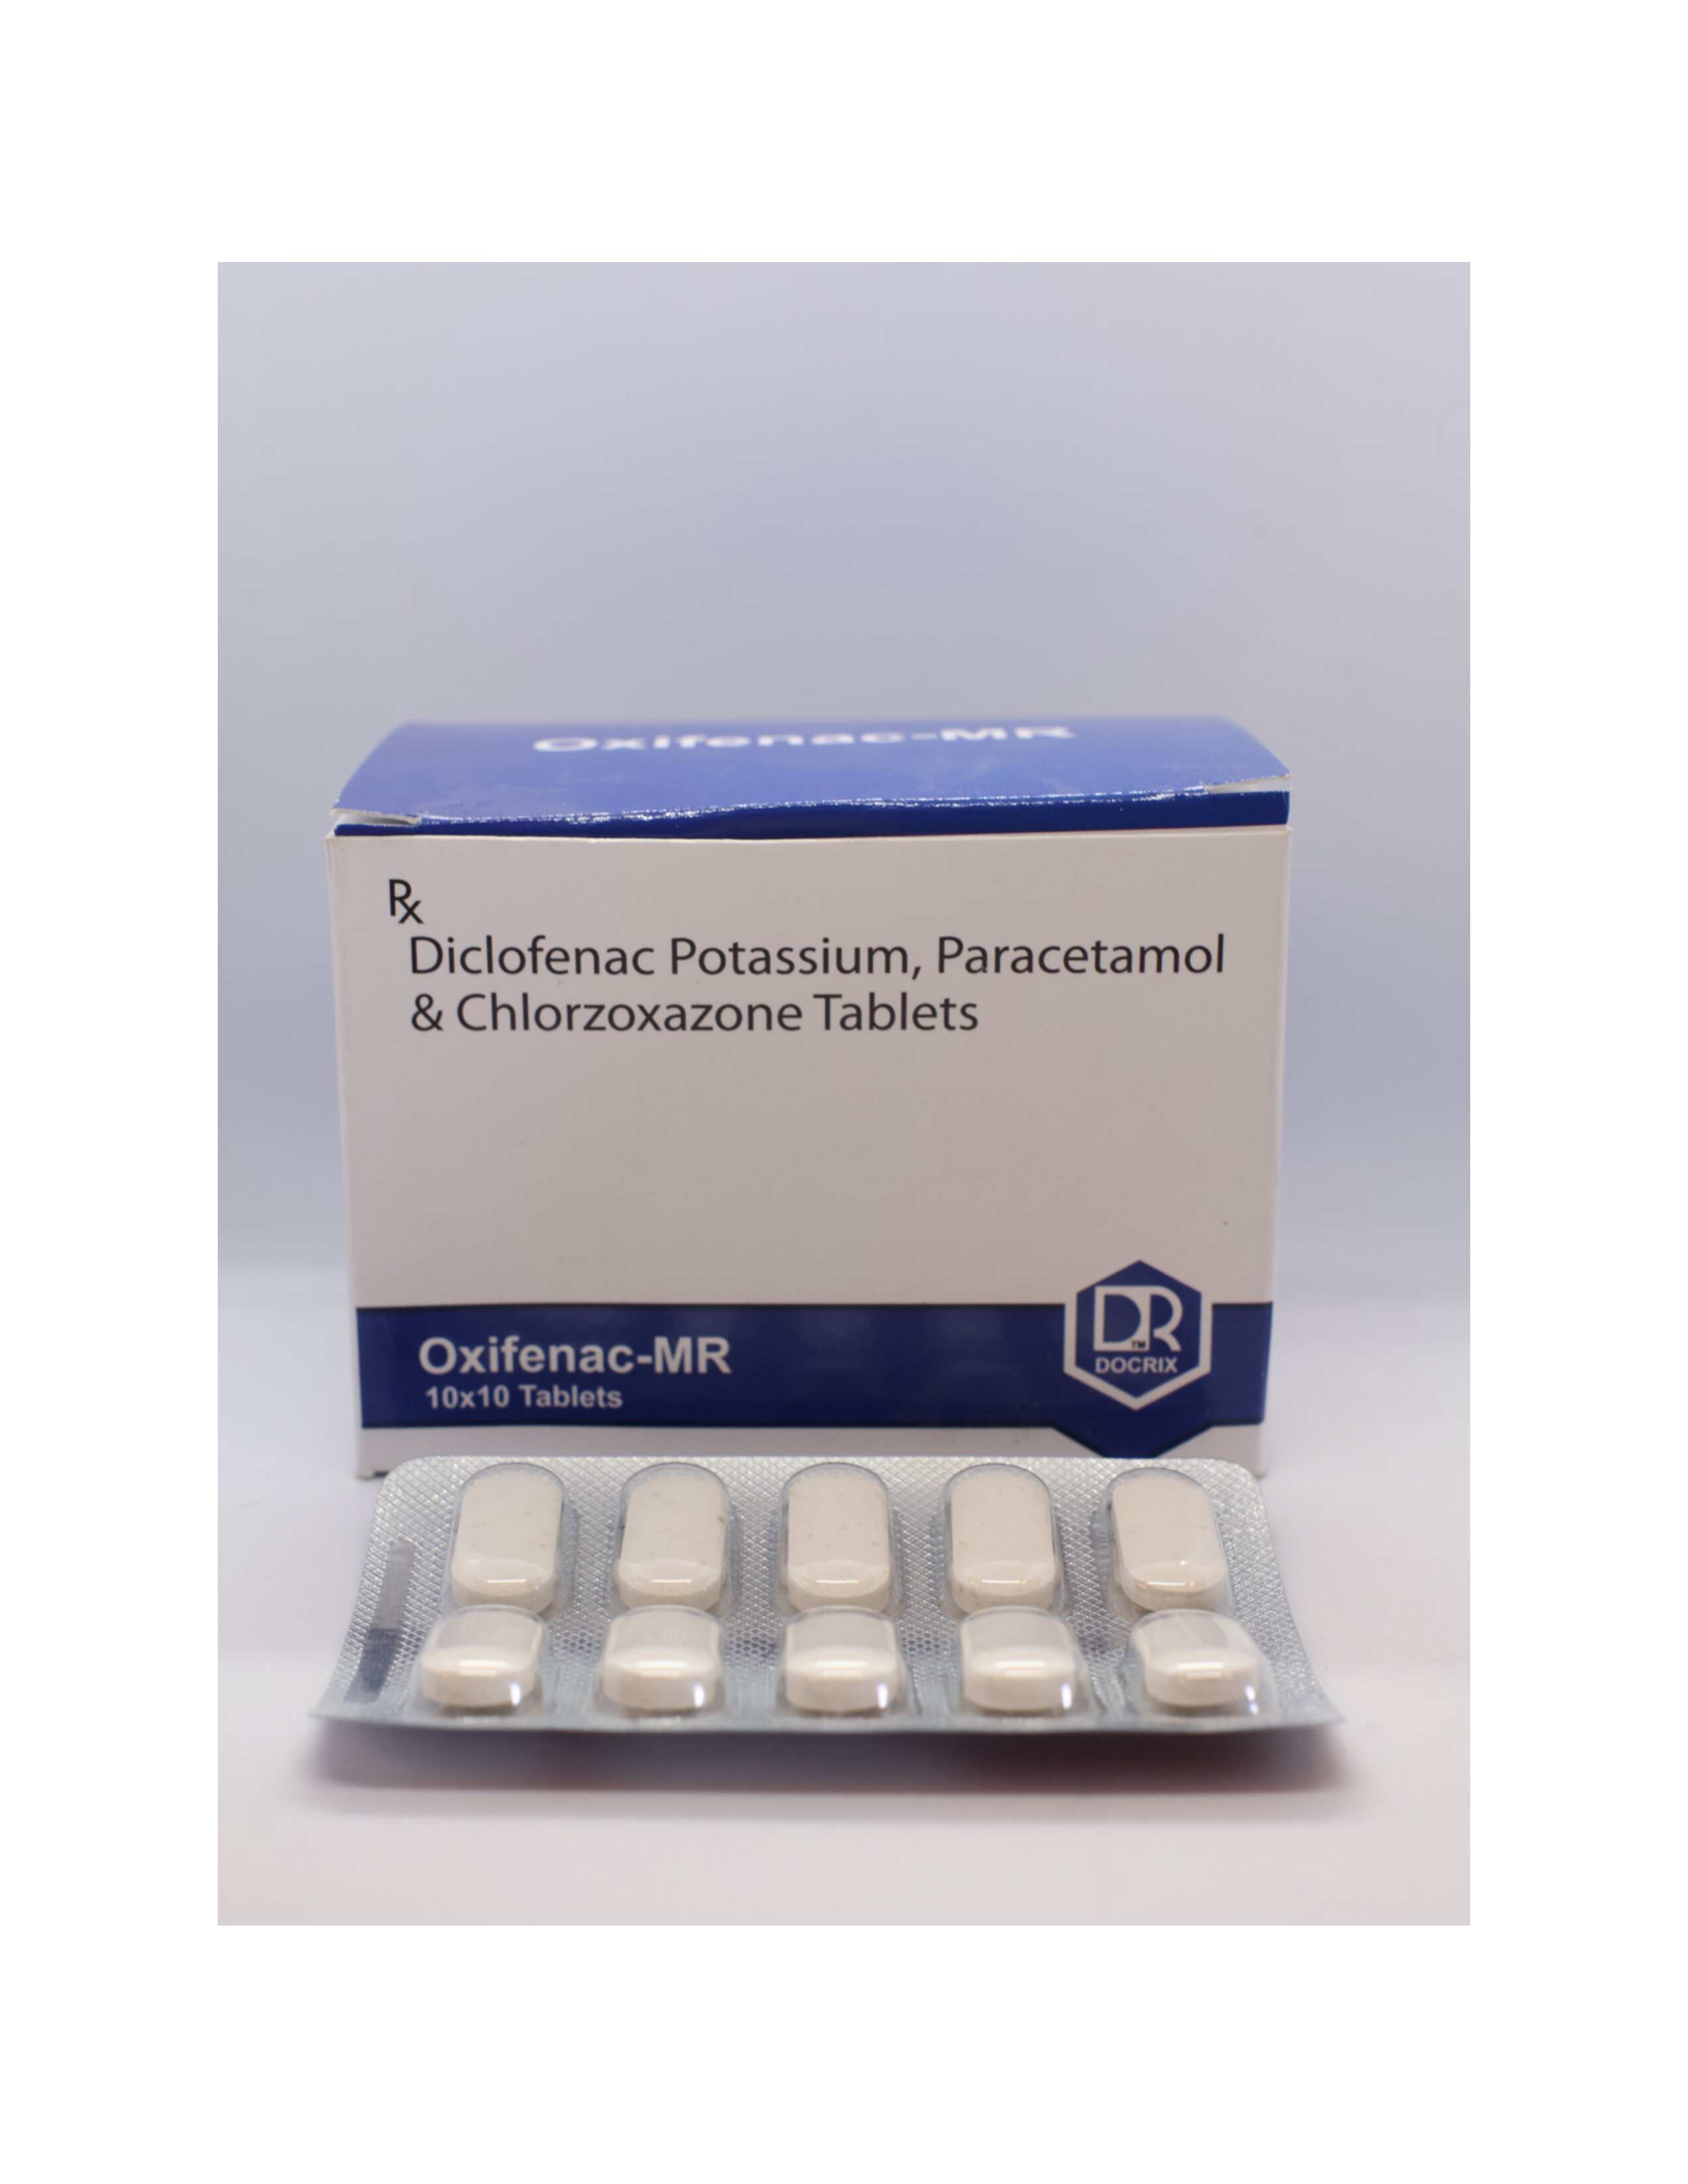 Product Name: Oxifenac MR, Compositions of Oxifenac MR are Diclofenac  Potassium, Paracetamol & Chlorzoxazone Tablets - Docrix Healthcare